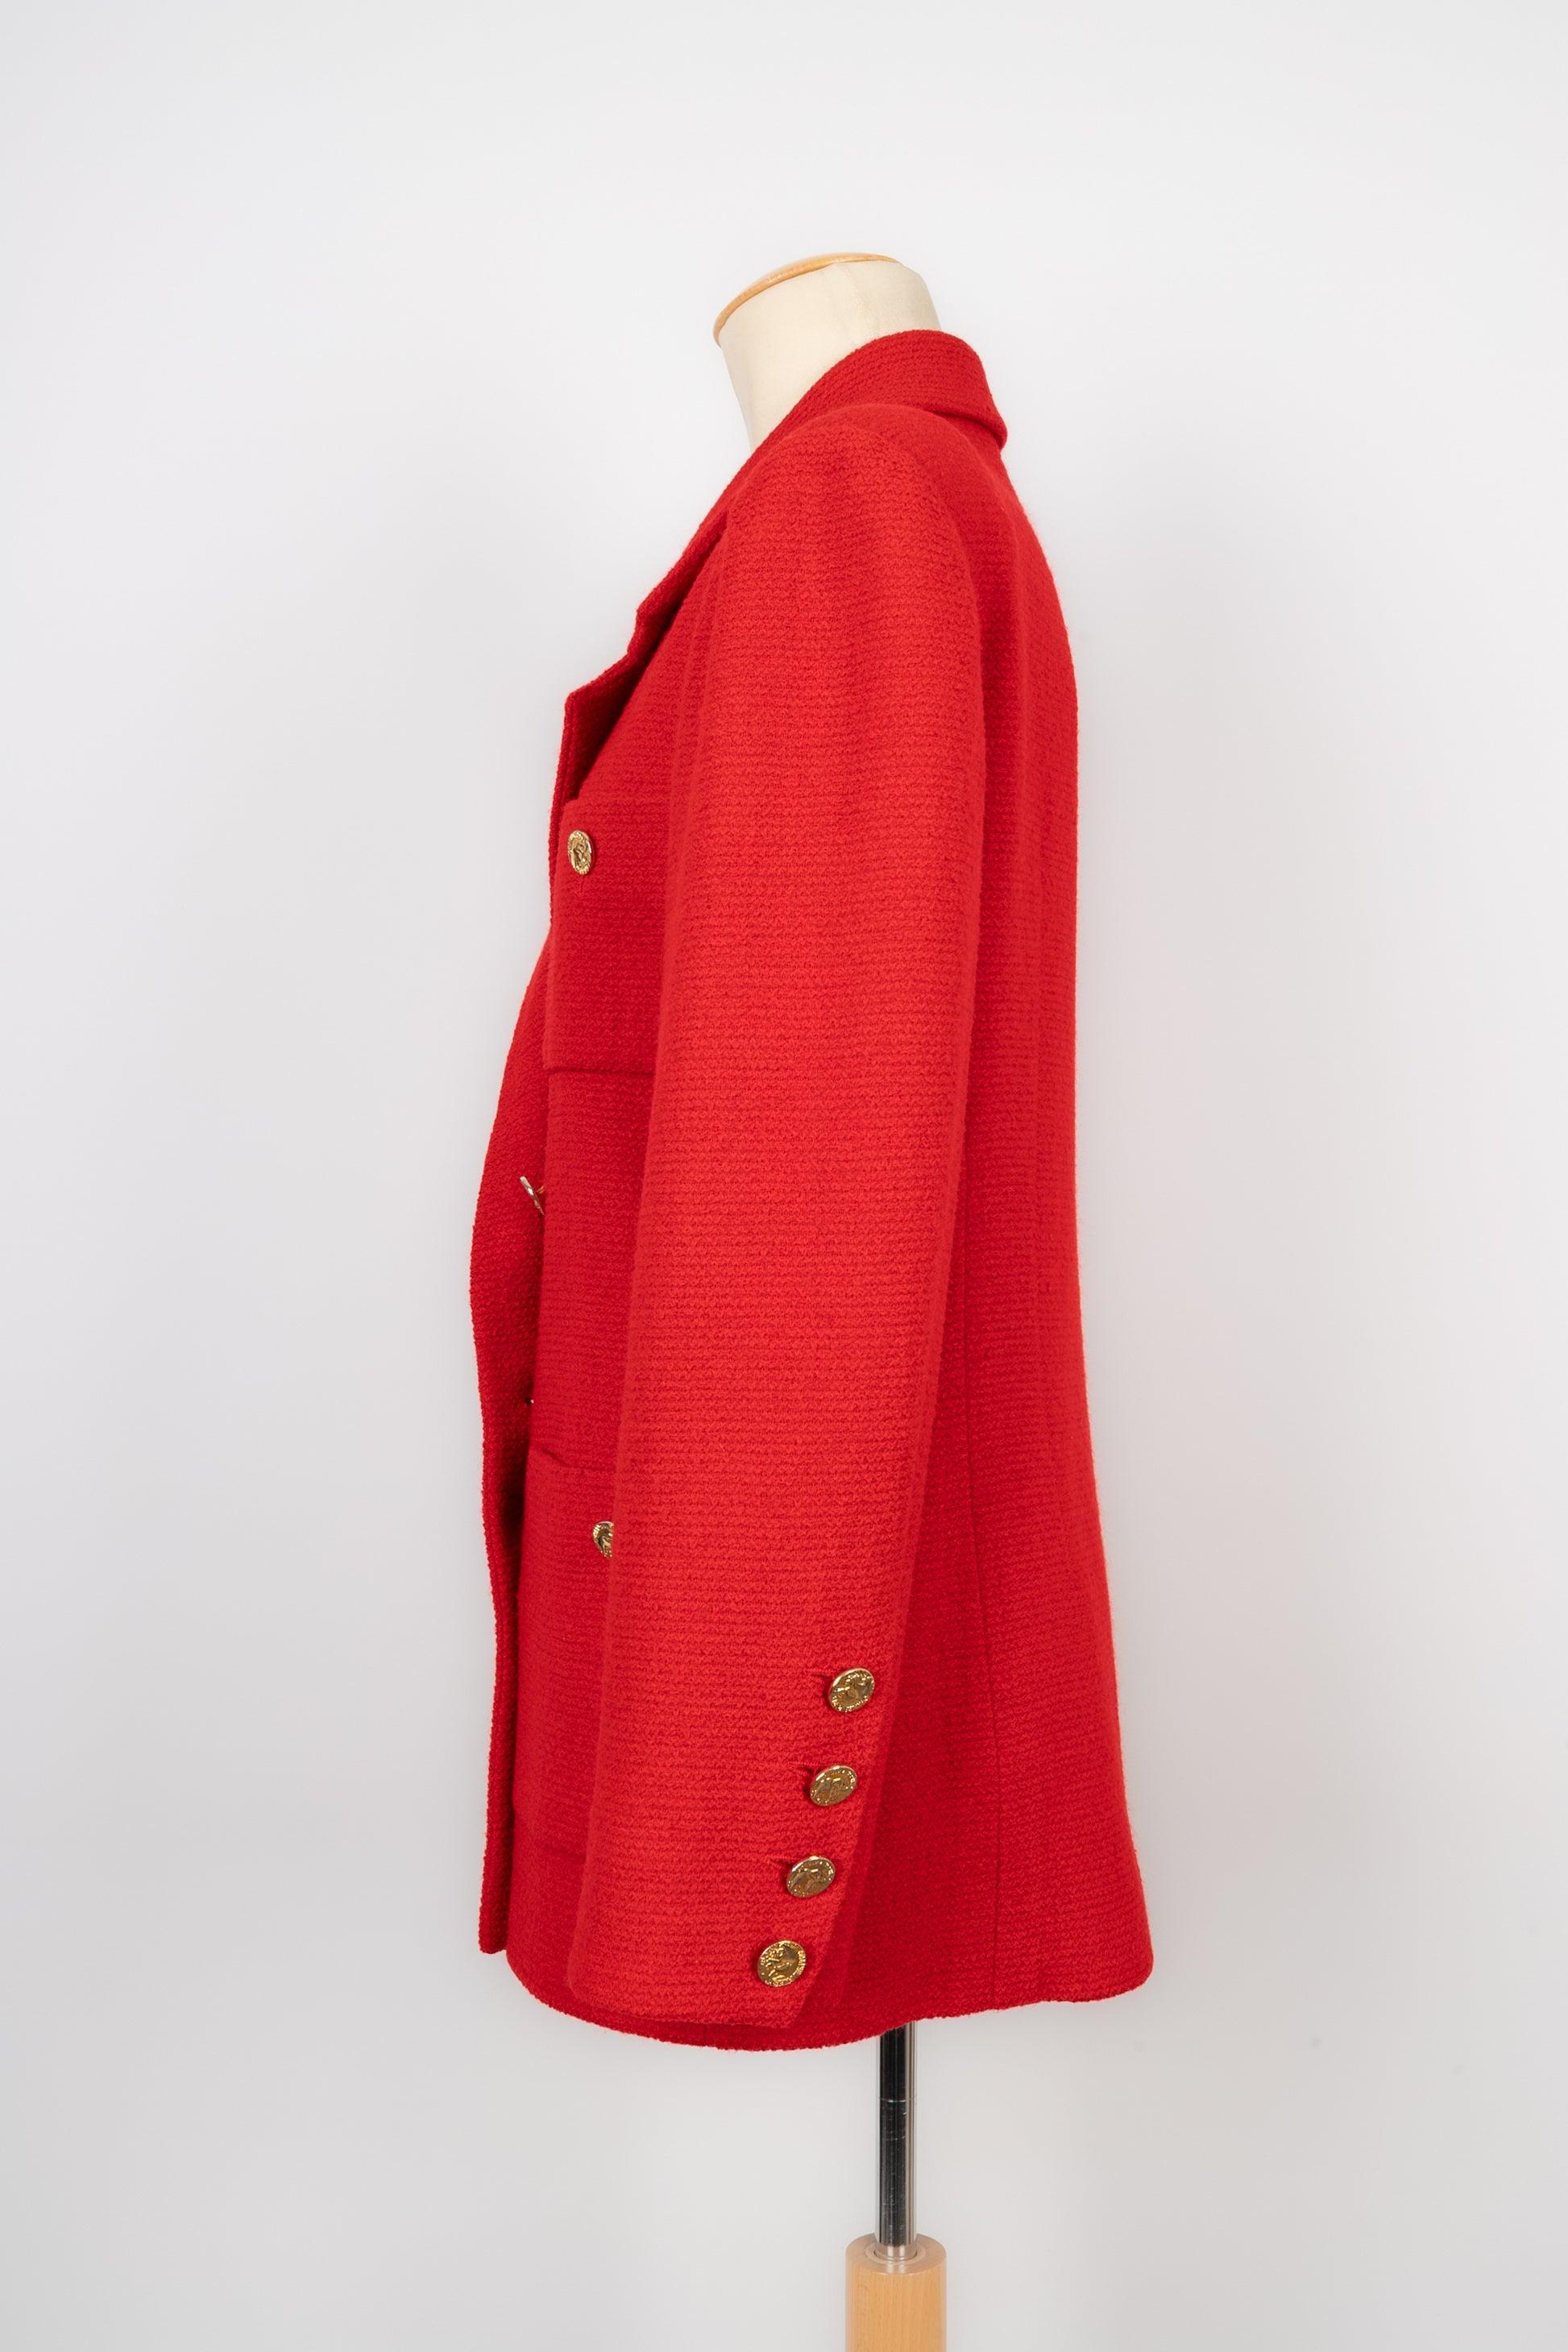 Chanel Rote Tweed-Jacke Damen